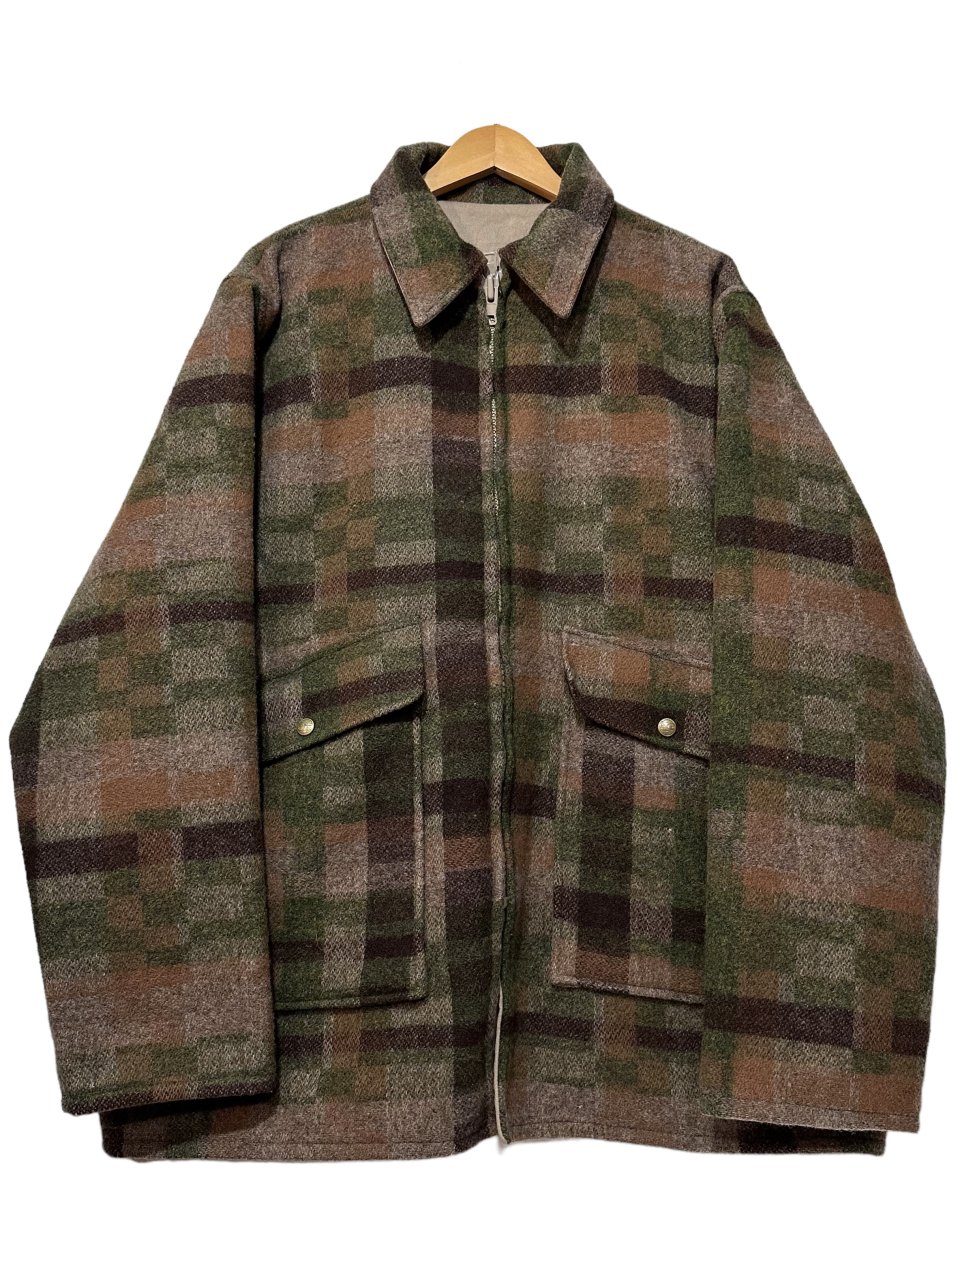 L.L.Bean hunting jacket ハンティングジャケット 80s